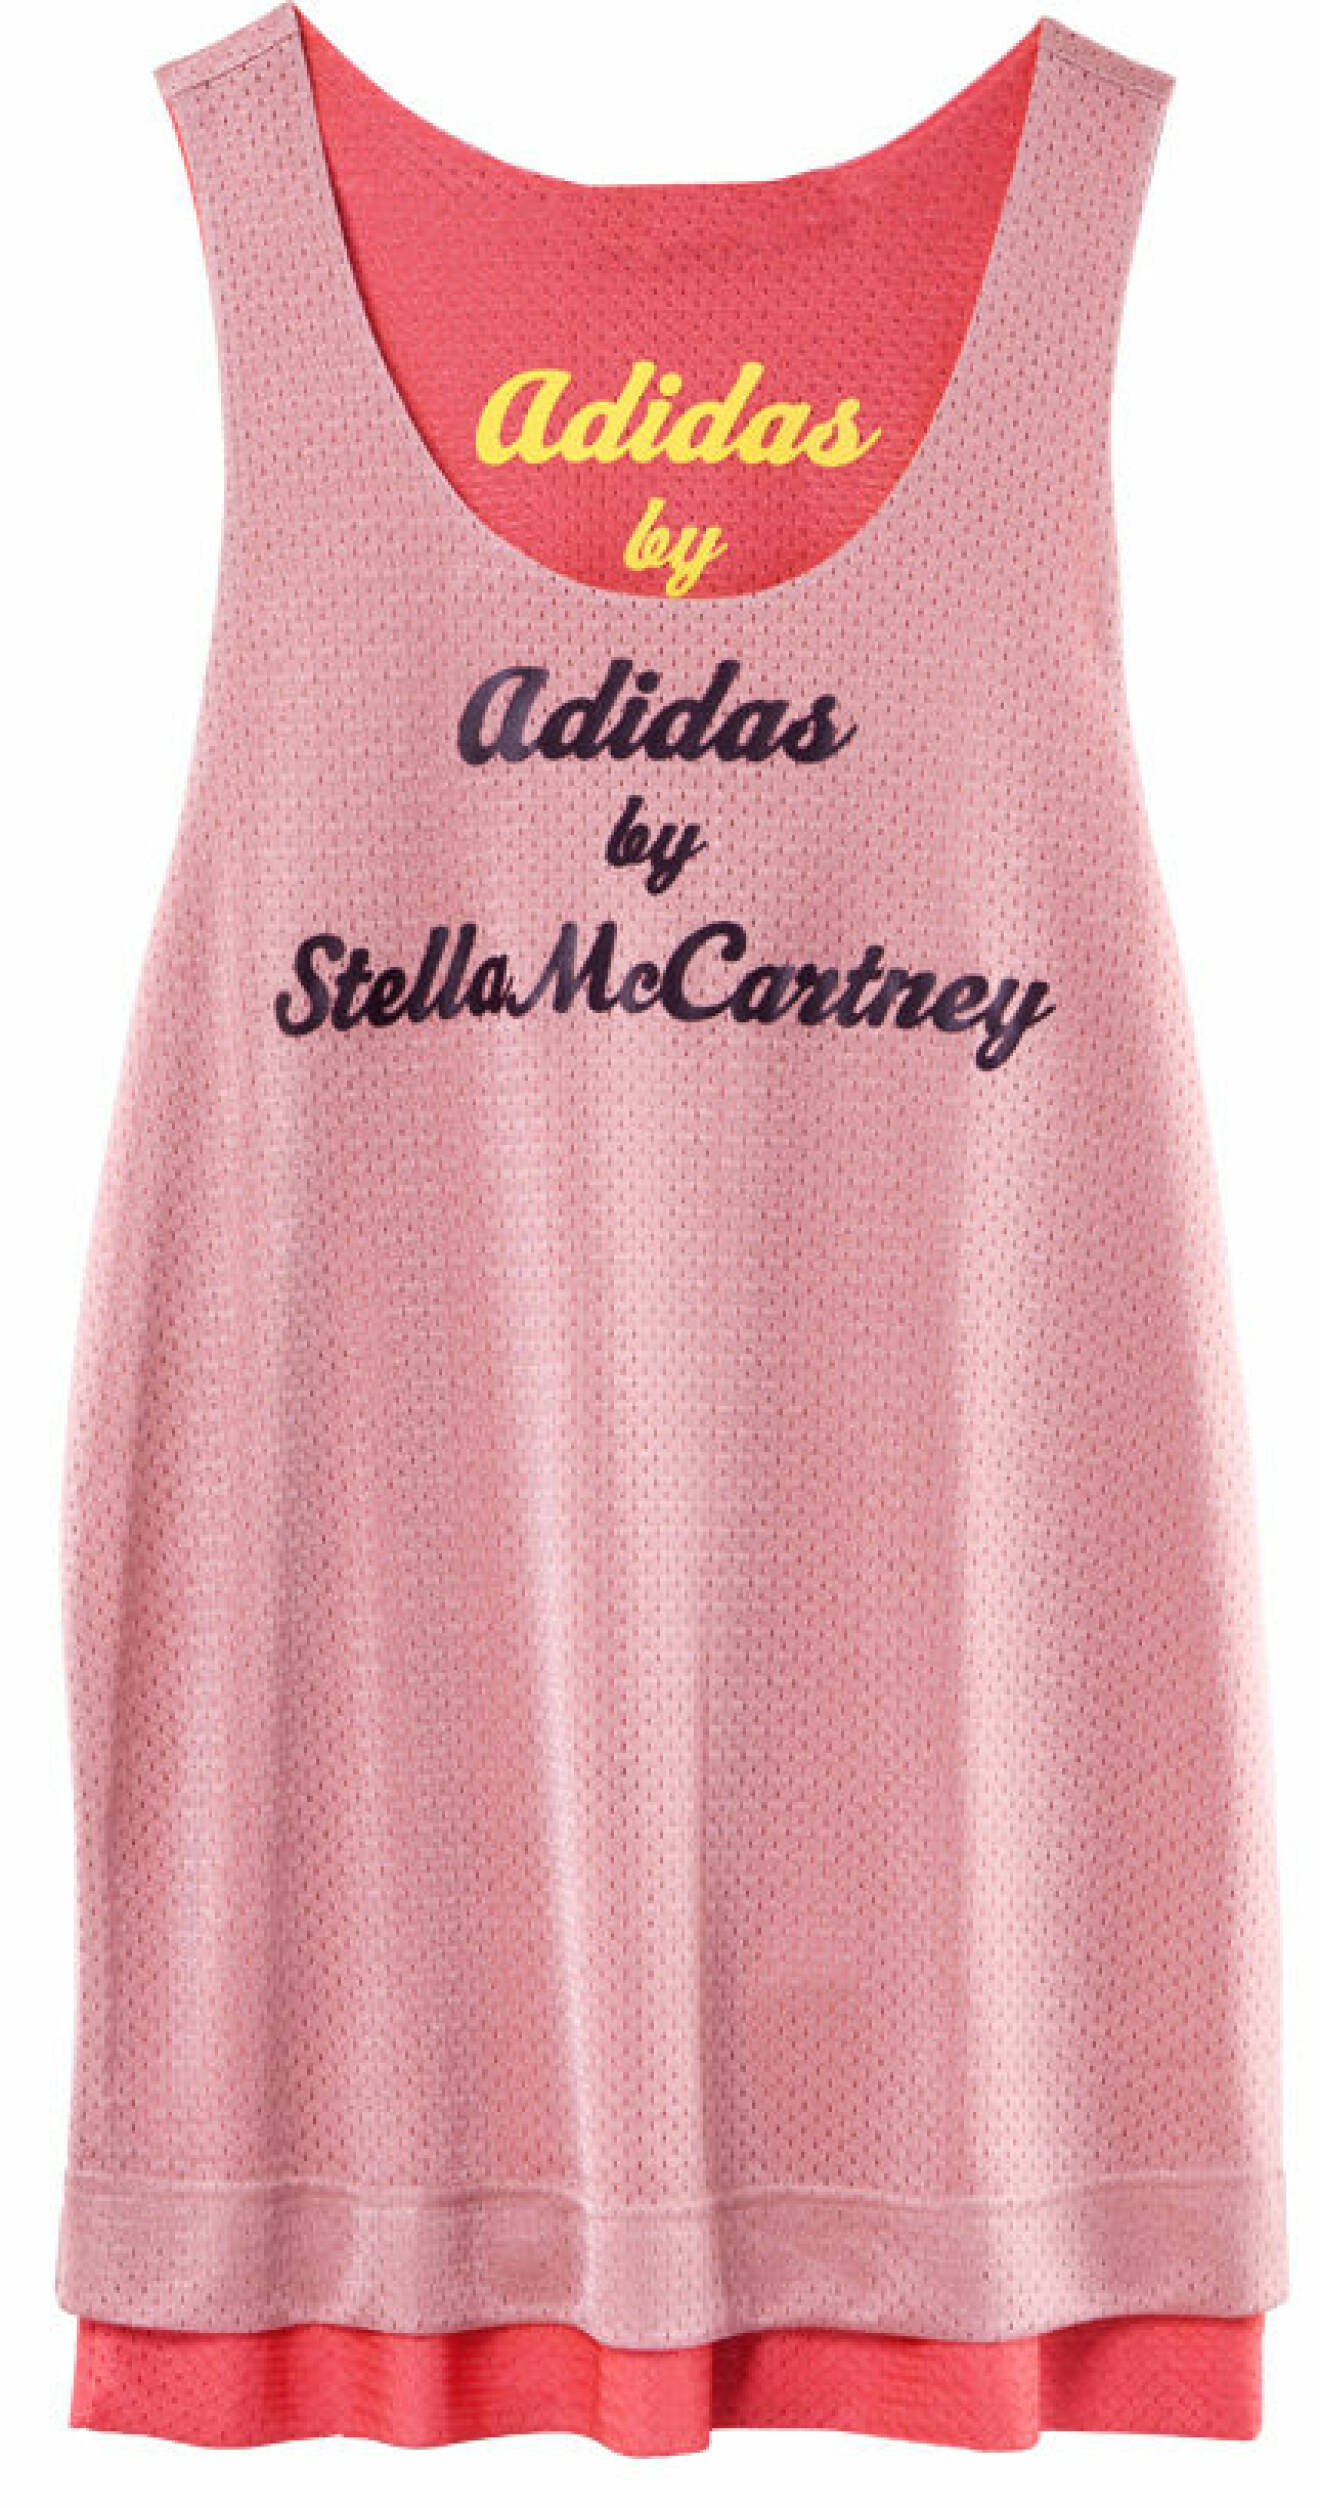 Adidas_Stella_Mcartney